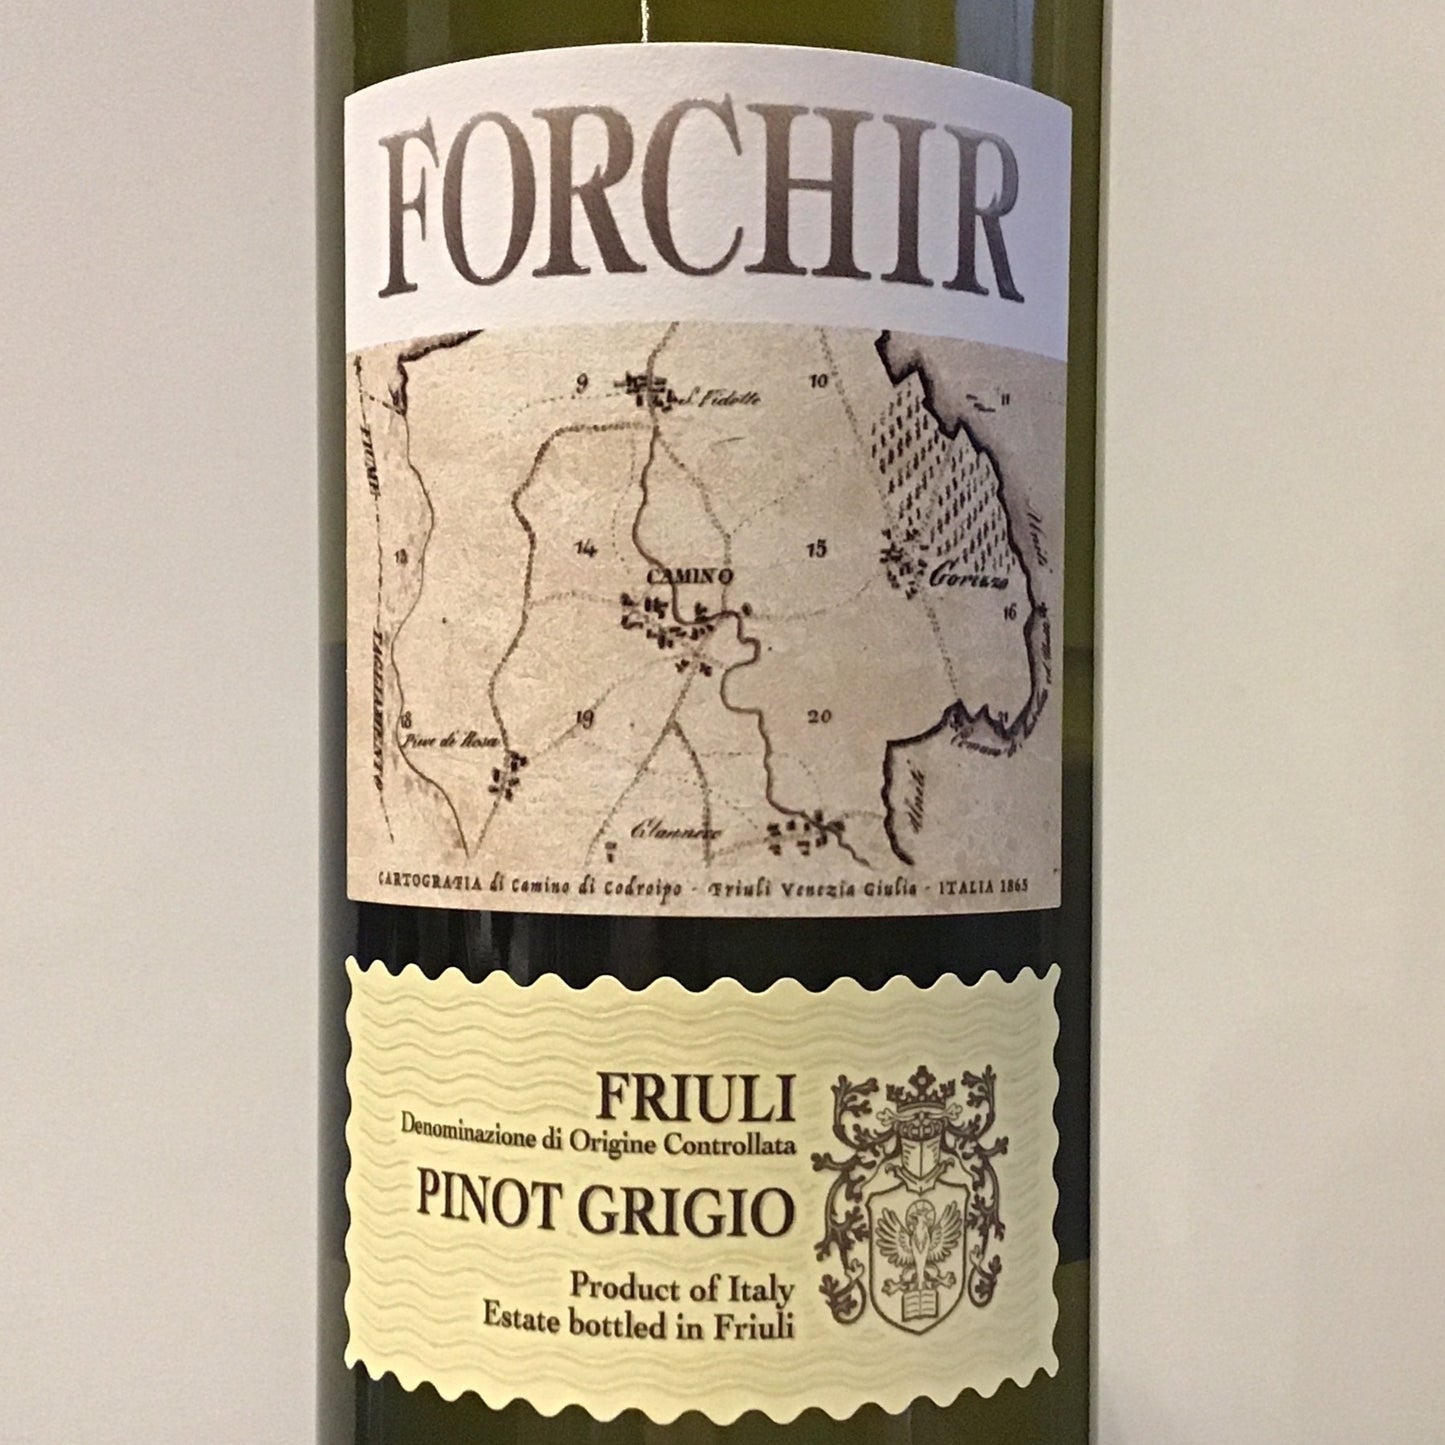 Forchir - Pinot Grigio